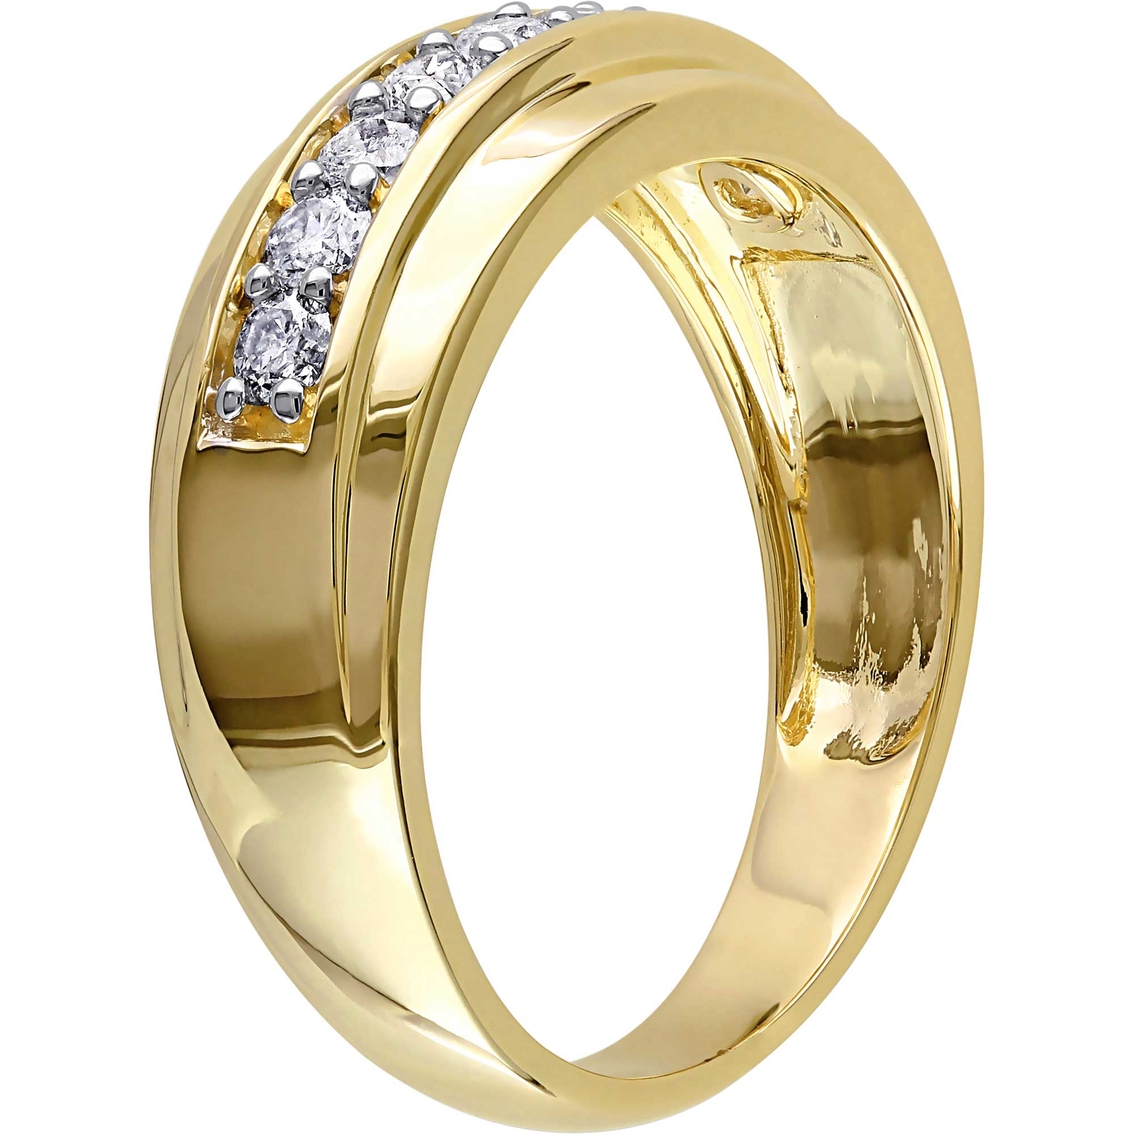 Sofia B. 10K Yellow Gold 1/2 CTW Diamond Men's Wedding Band - Image 2 of 3